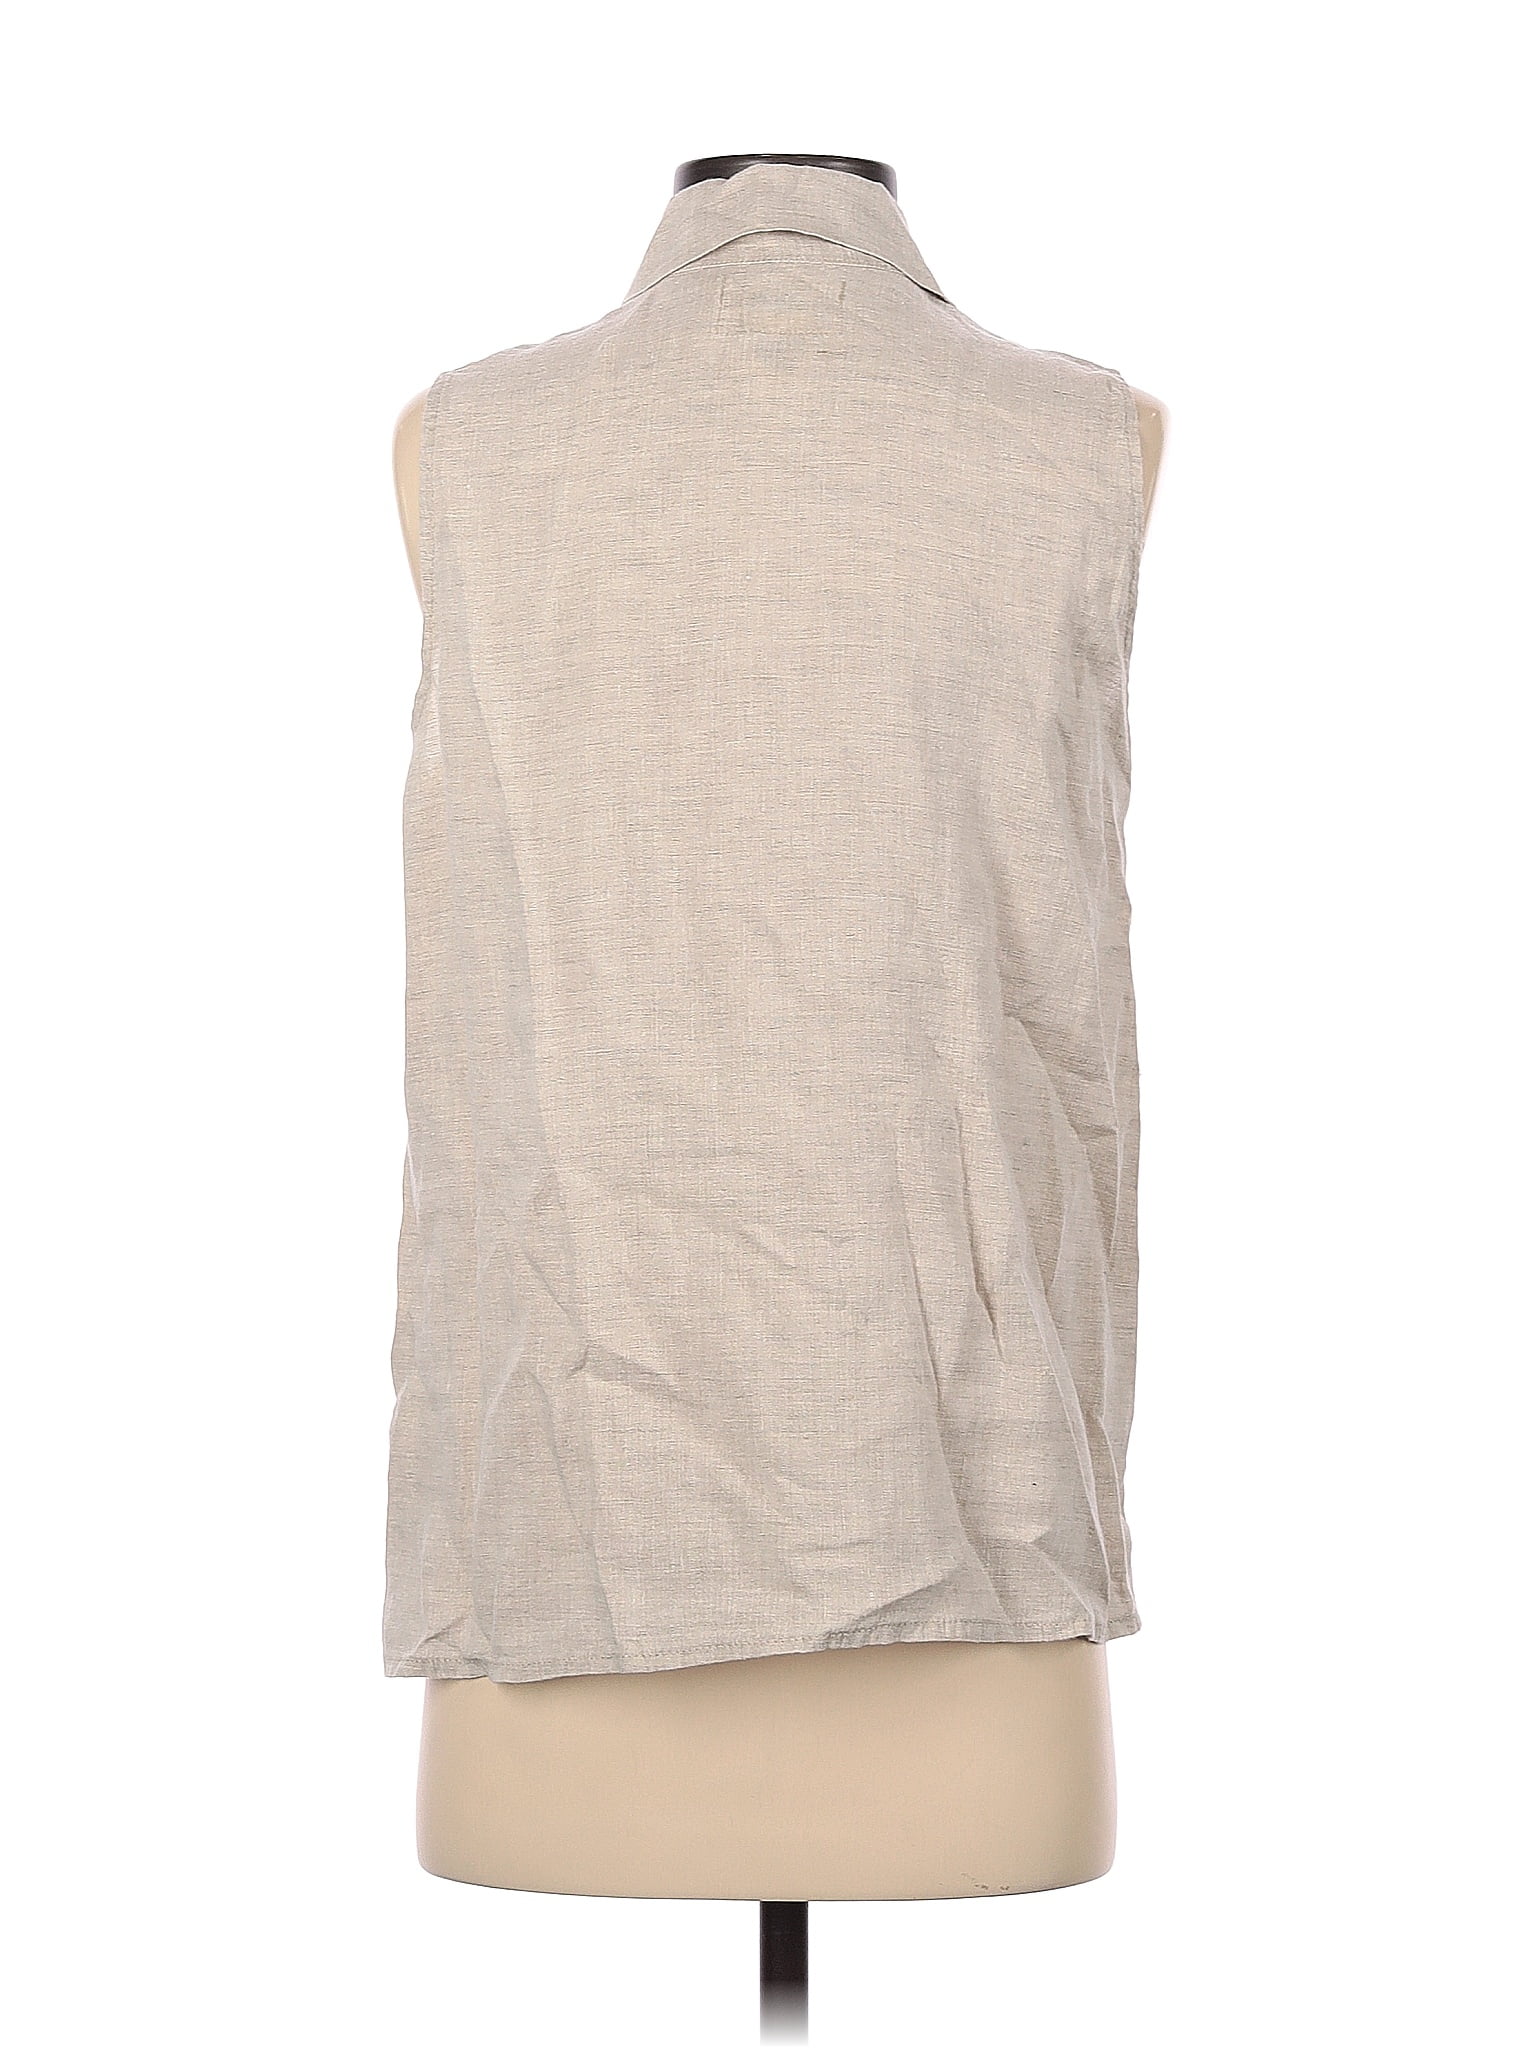 FLAX by Jeanne Engelhart 100% Linen Tan Gray Sleeveless Blouse Size S - 68%  off